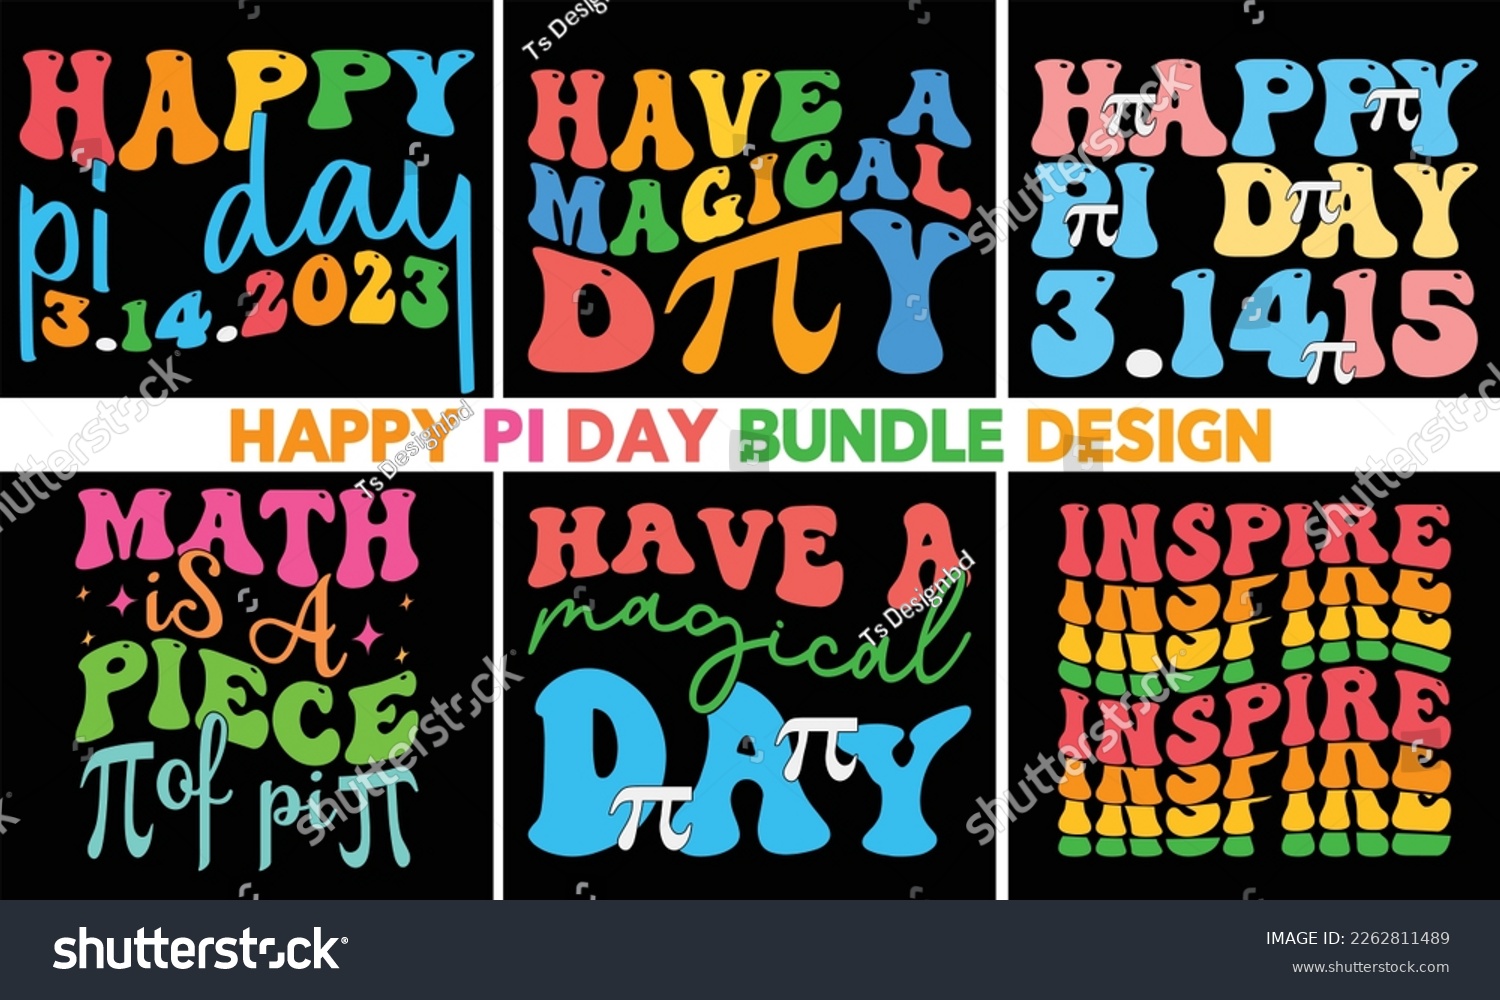 SVG of Happy Pi Day svg Bundle Design,Math Teachers svg, Teacher Shirt SVG,3.14159 SVG,Typography design for Pi day, math teacher gift, math lover, engineer tees, svg